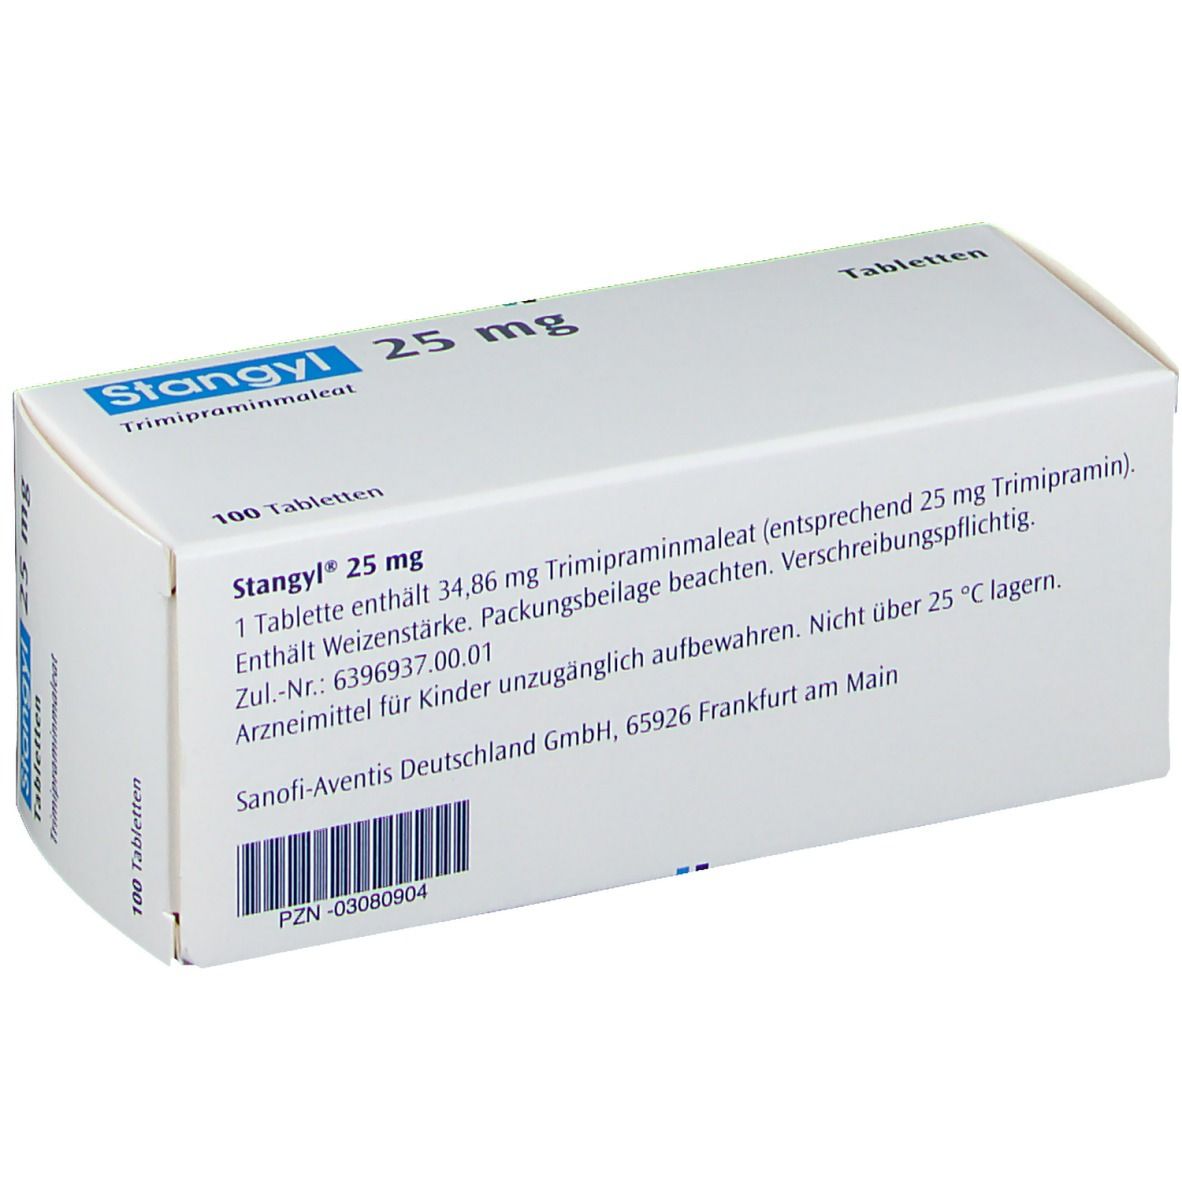 Stangyl® 25 mg